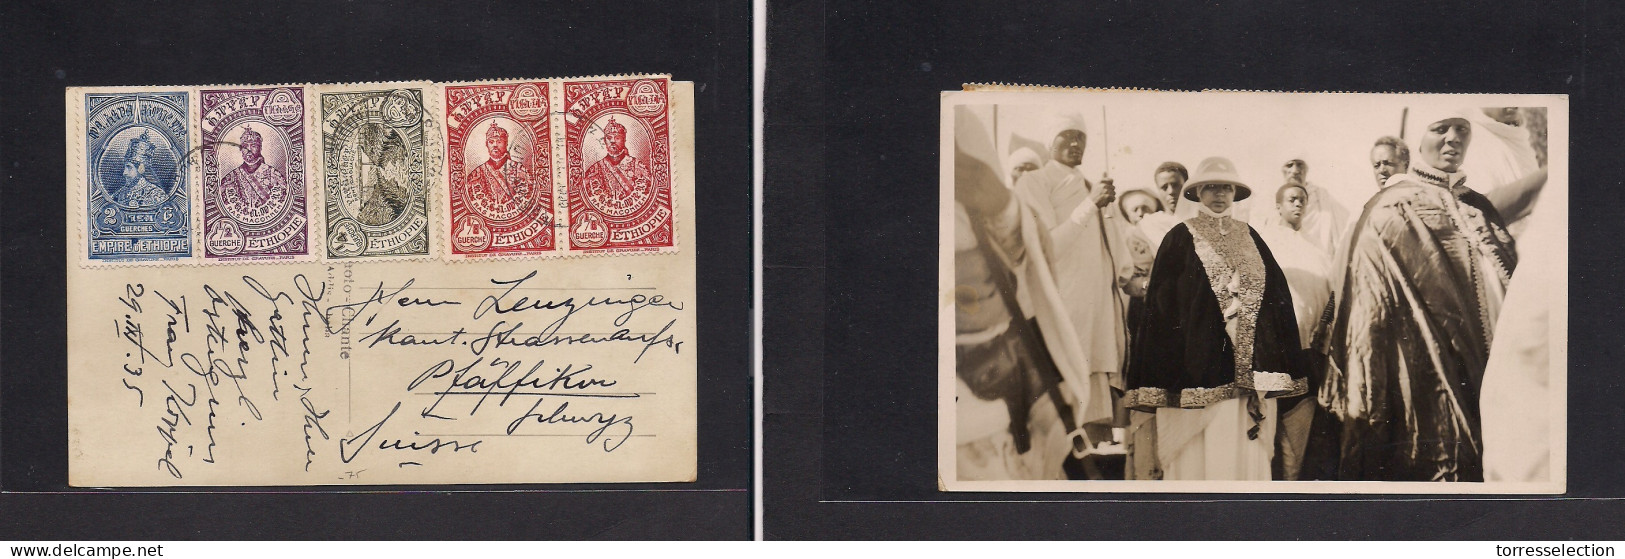 ETHIOPIA. 1935 (29 March) Addis Abeba - Switzerland, Pfaffikon. Multifkd Emperor Wife Photo Card. Lovely Usage At 3que R - Ethiopia